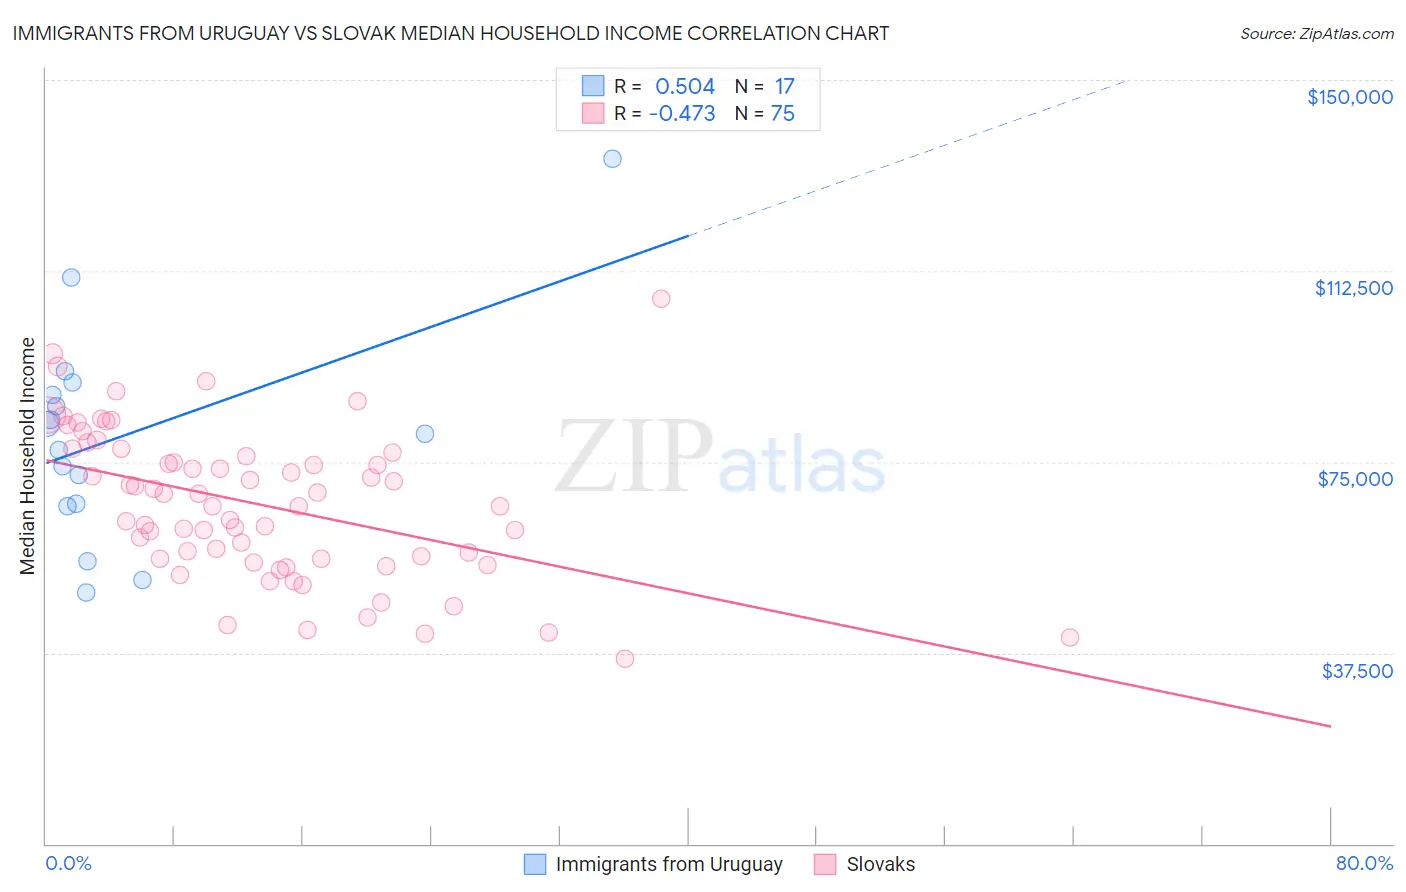 Immigrants from Uruguay vs Slovak Median Household Income